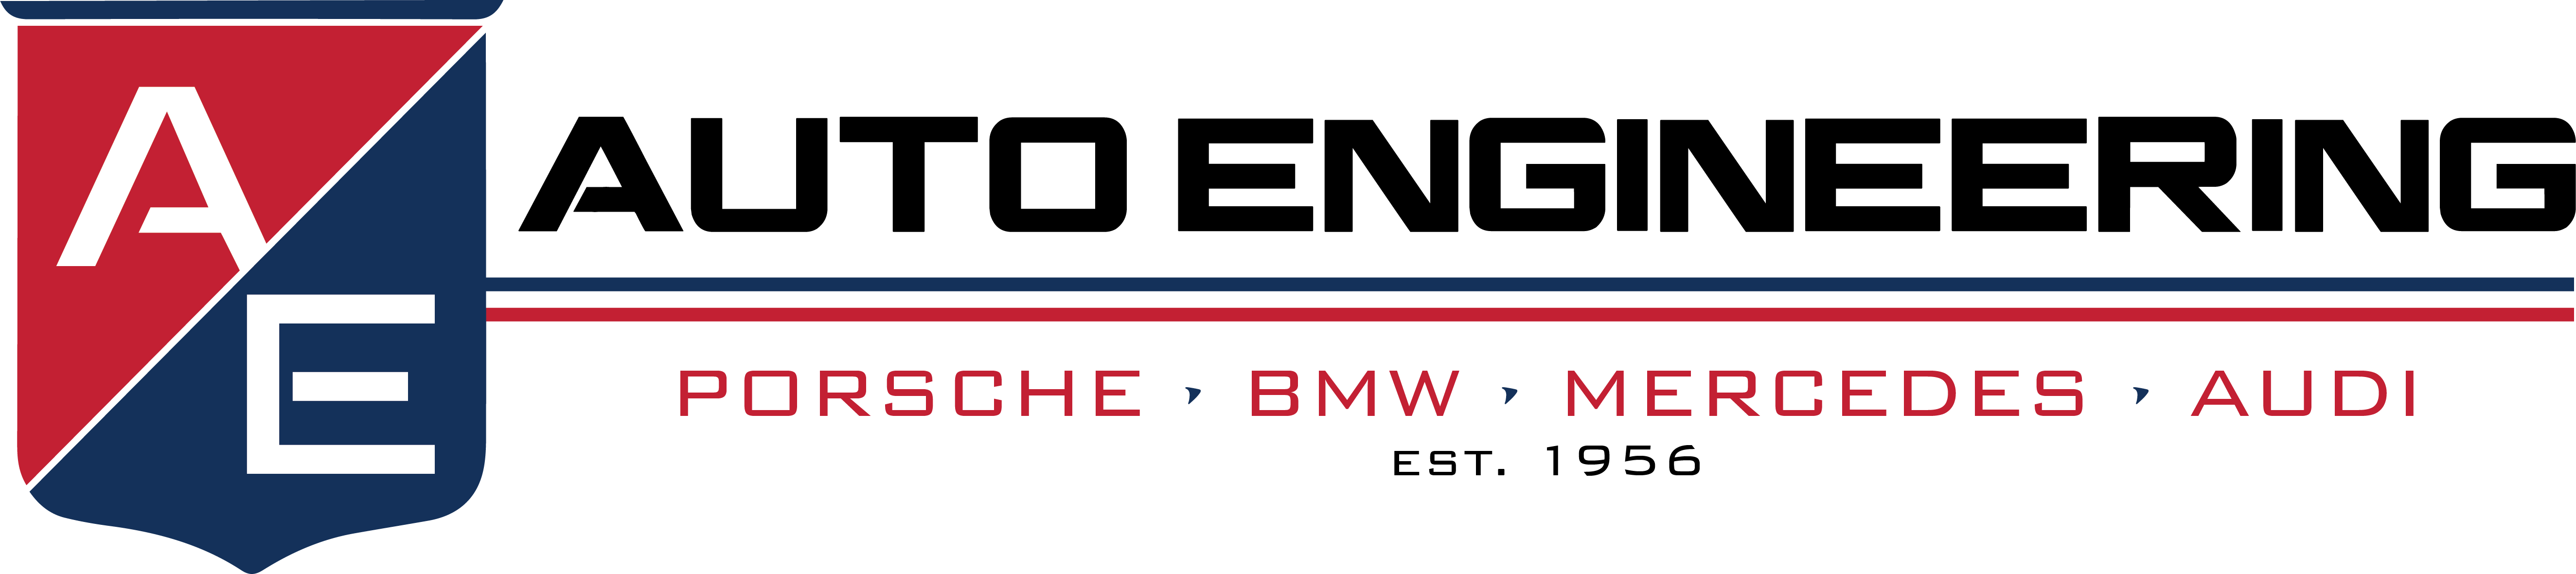 Auto Engineering Logo - Auto Engineering - German Auto Repair Shop | Porsche, Audi, BMW ...